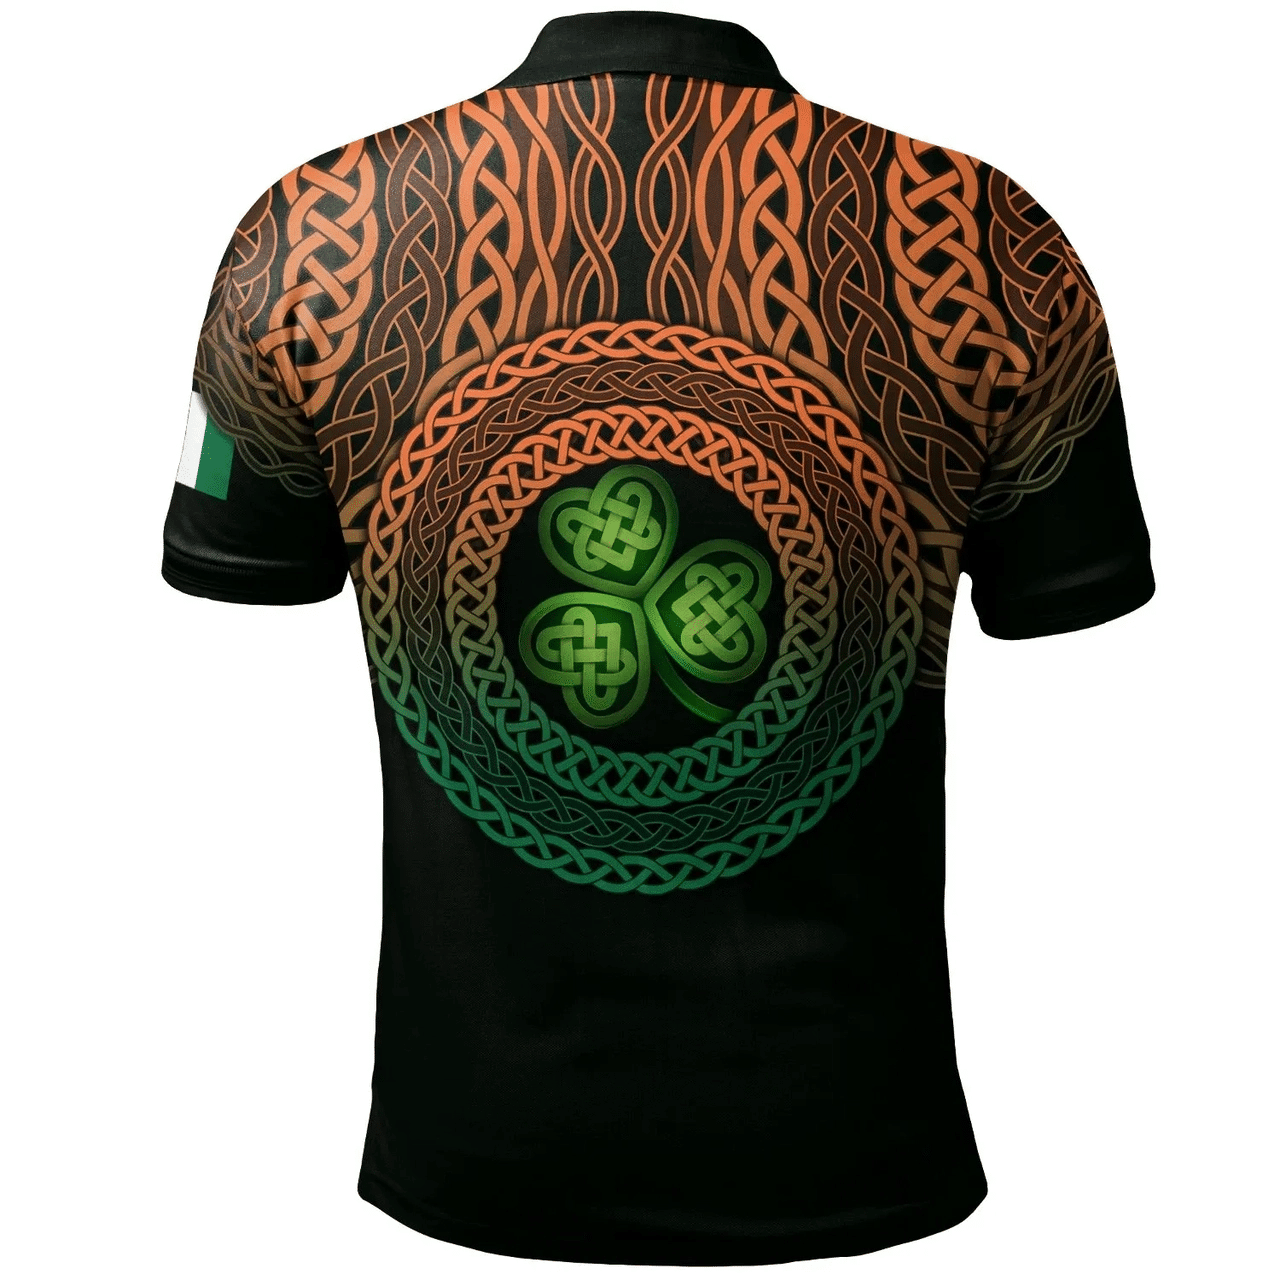 1stIreland Ireland Polo Shirt - Roney or O'Rooney Irish Family Crest Polo Shirt - Celtic Pride A7 | 1stIreland.com